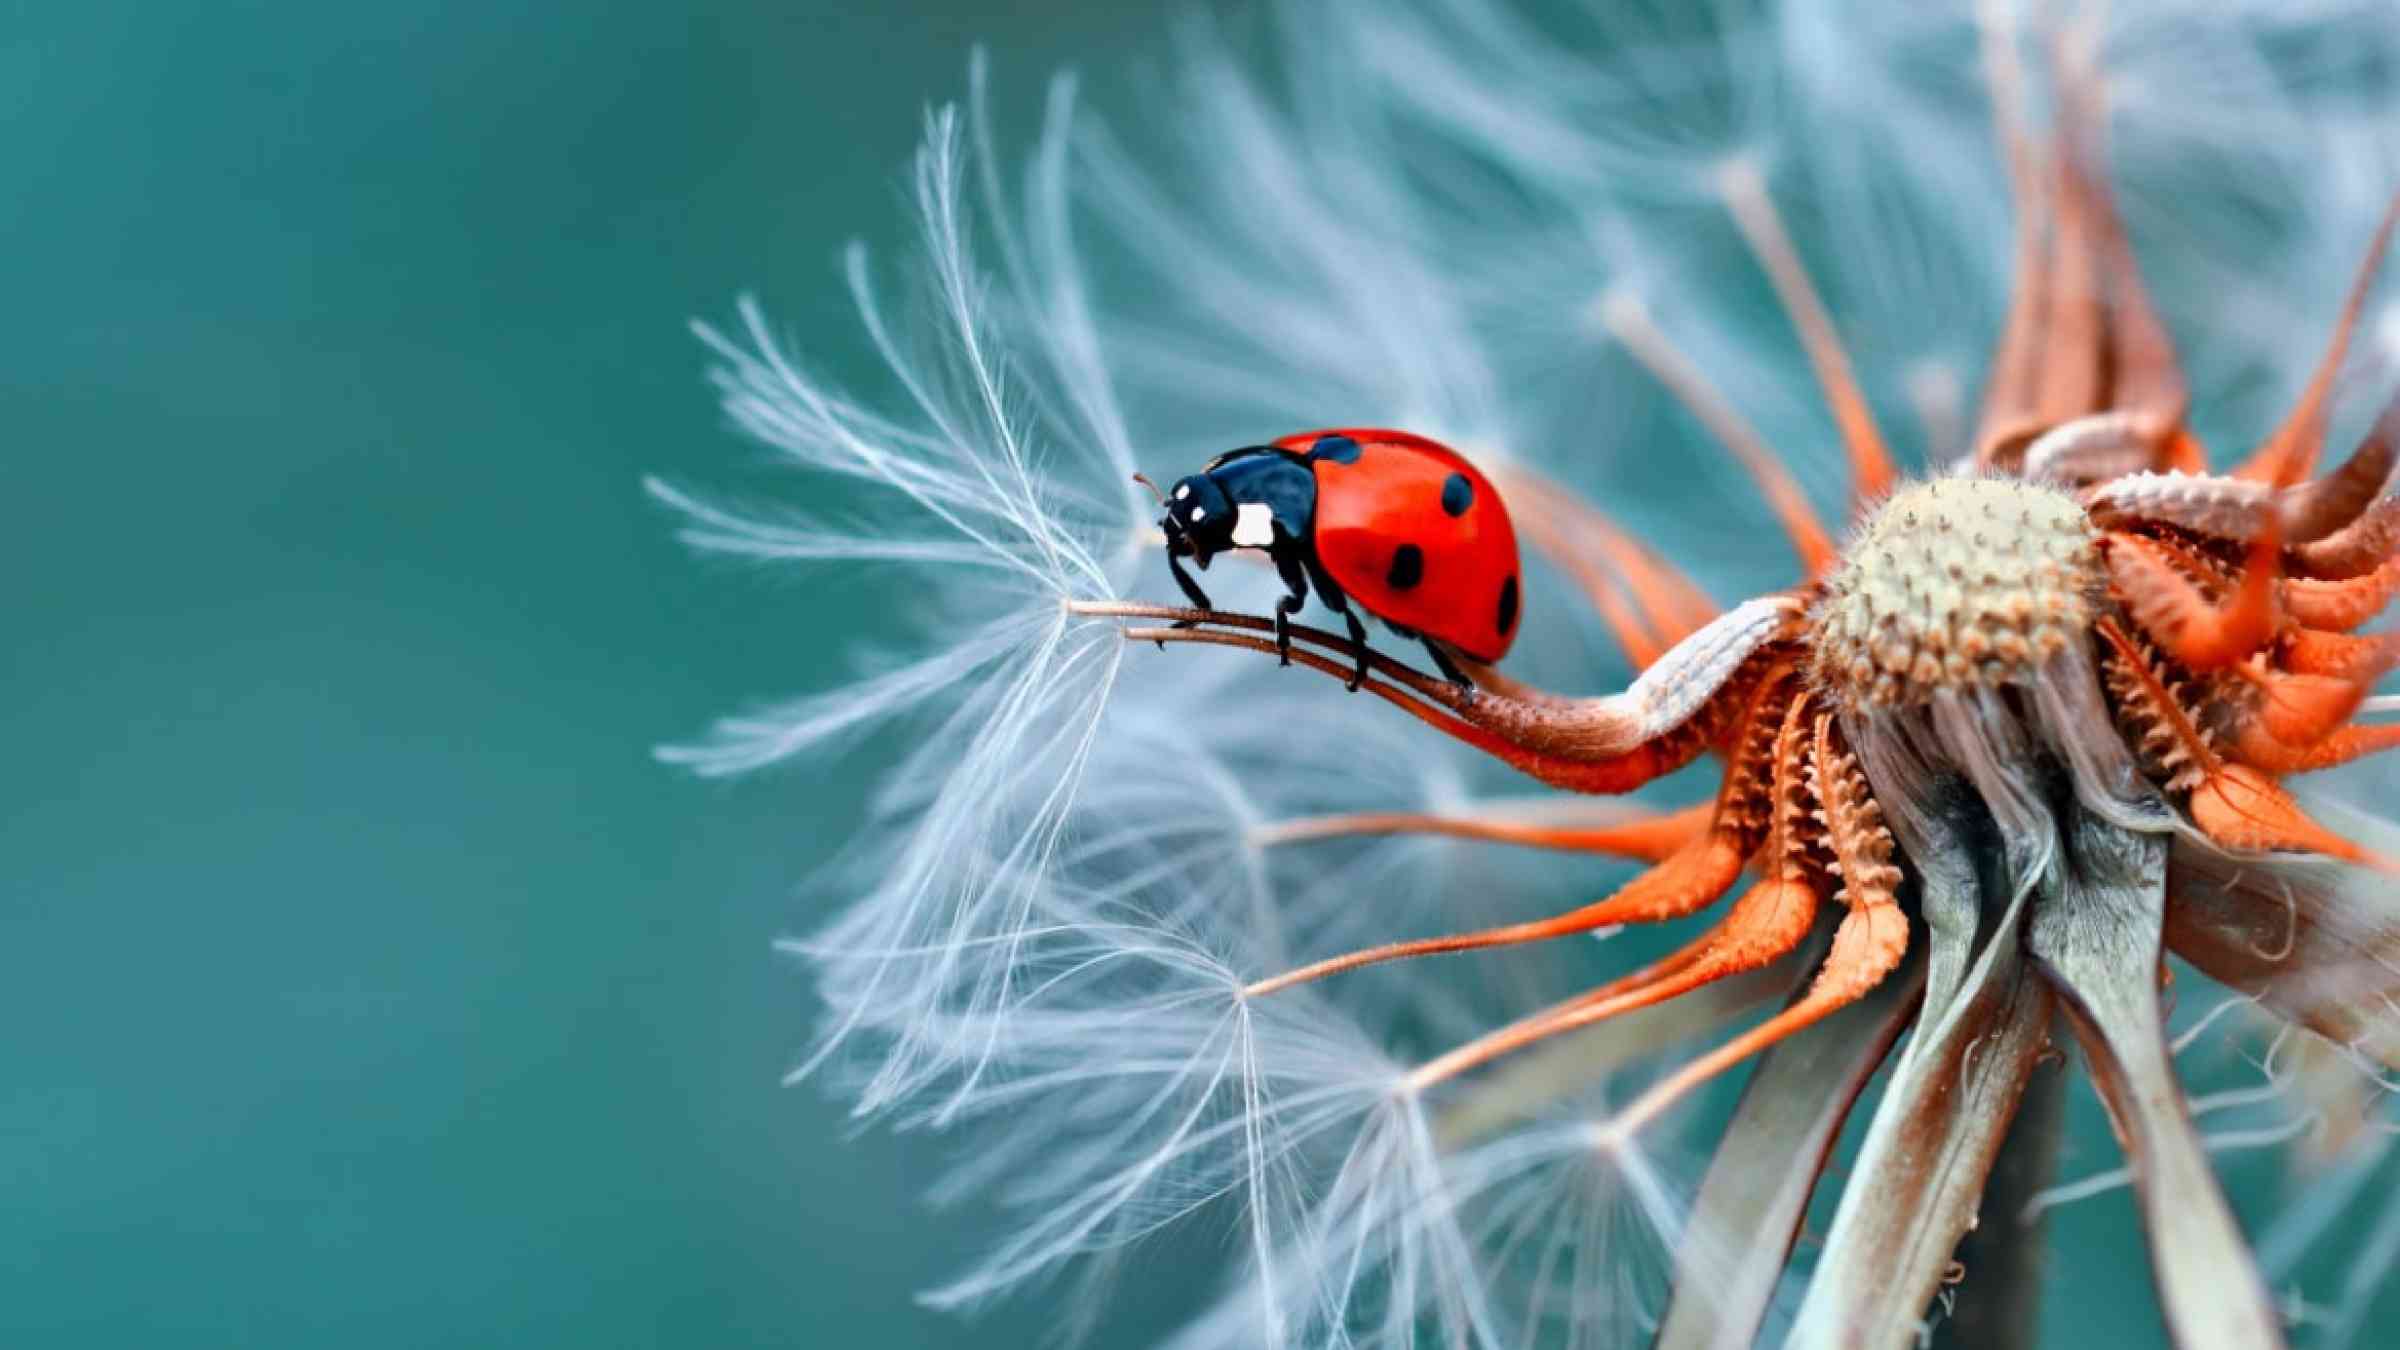 Ladybird on a flower.